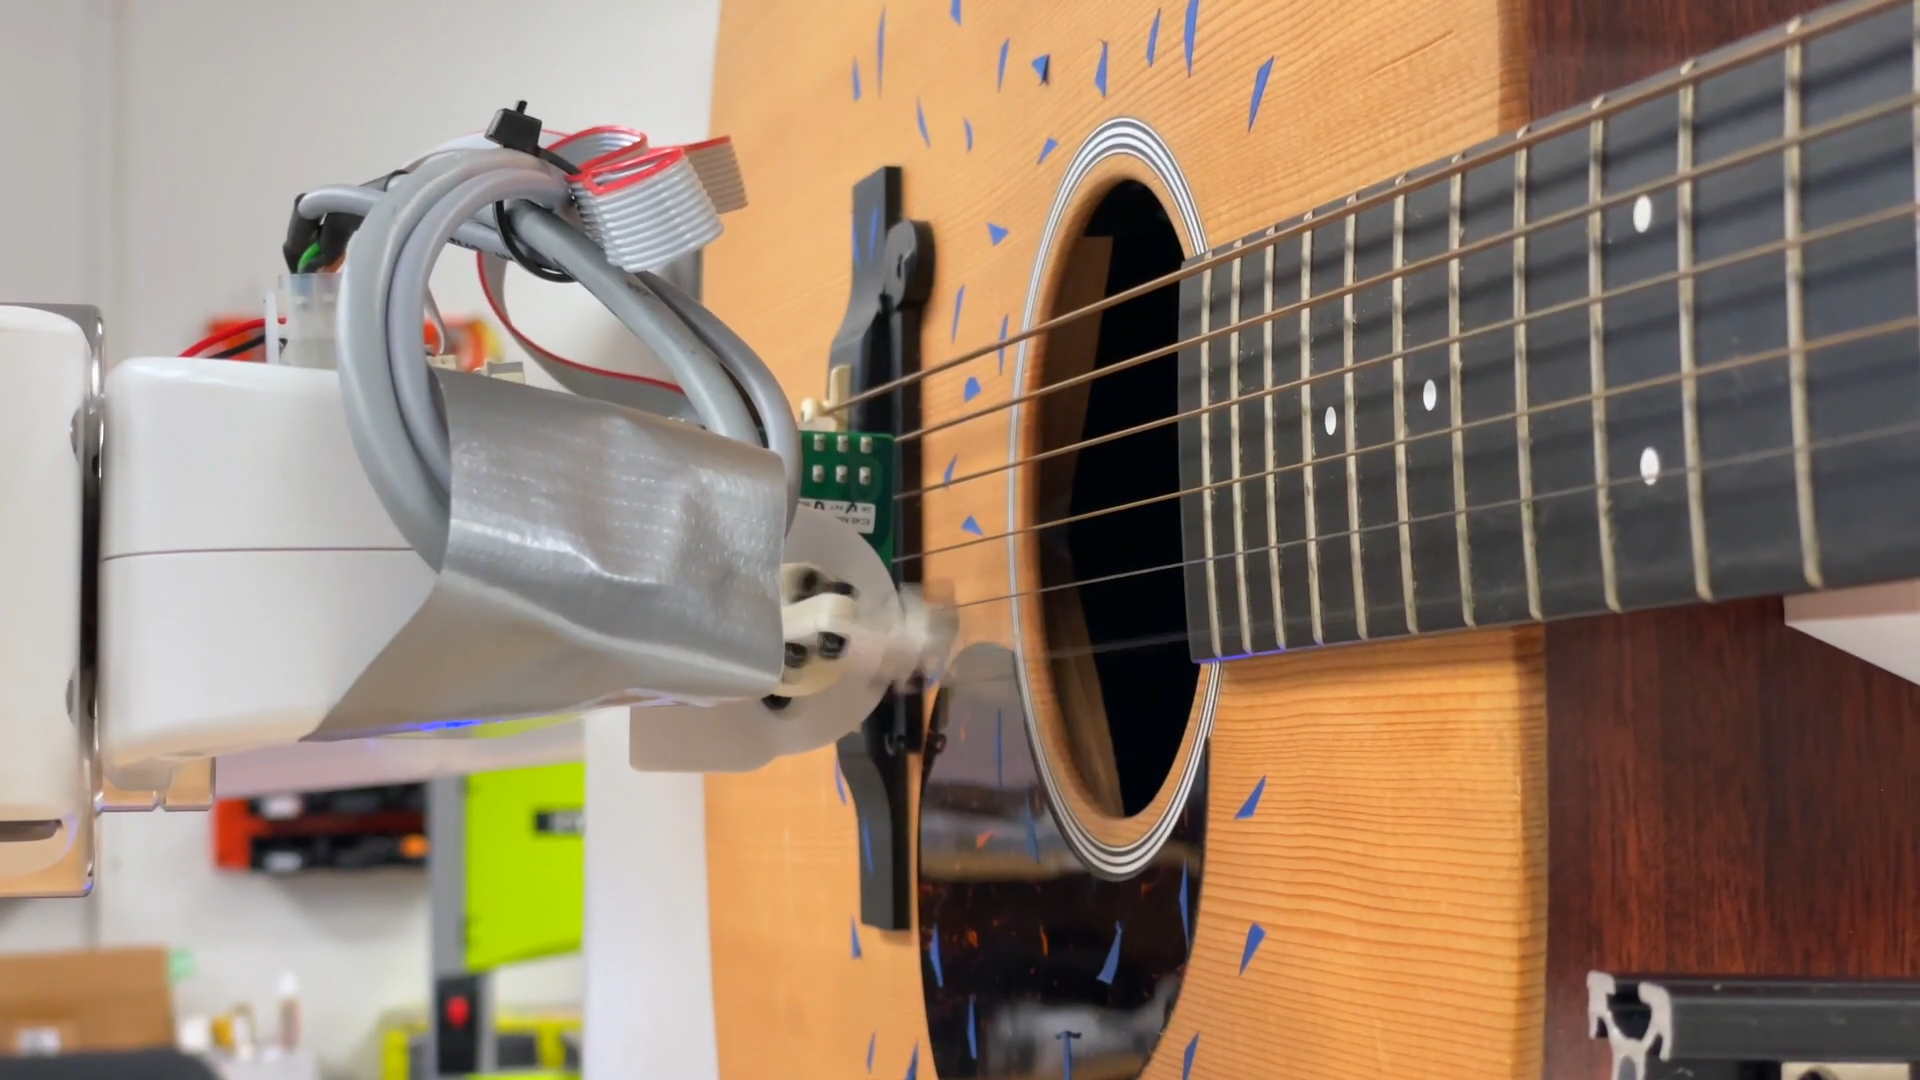 Closeup of a robotic arm strumming an acoustic guitar